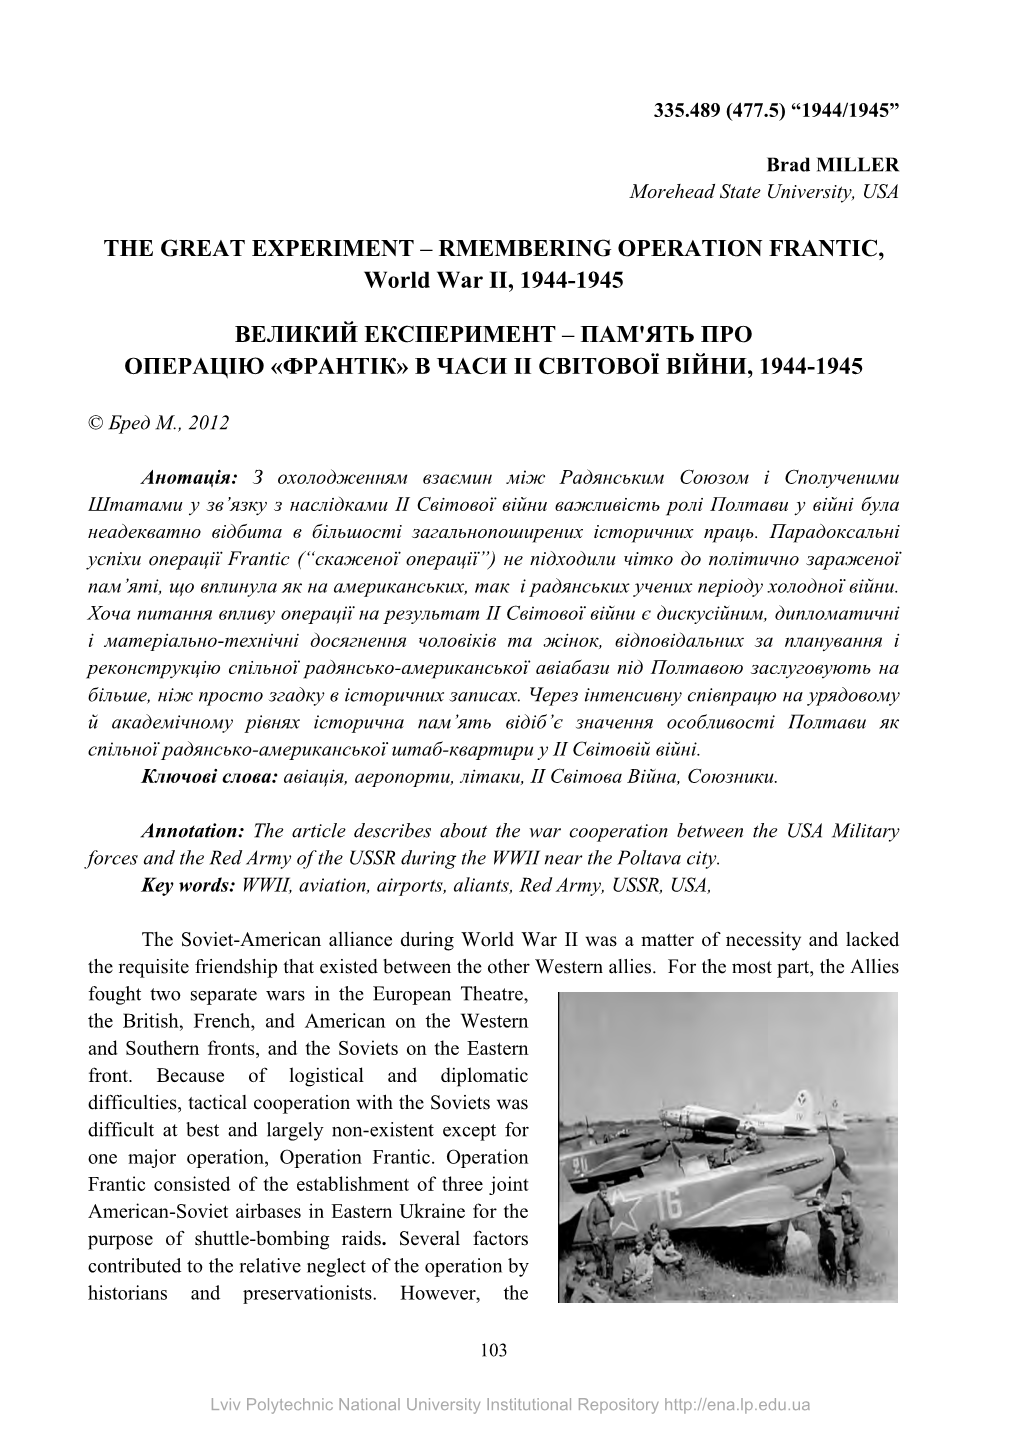 RMEMBERING OPERATION FRANTIC, World War II, 1944-1945